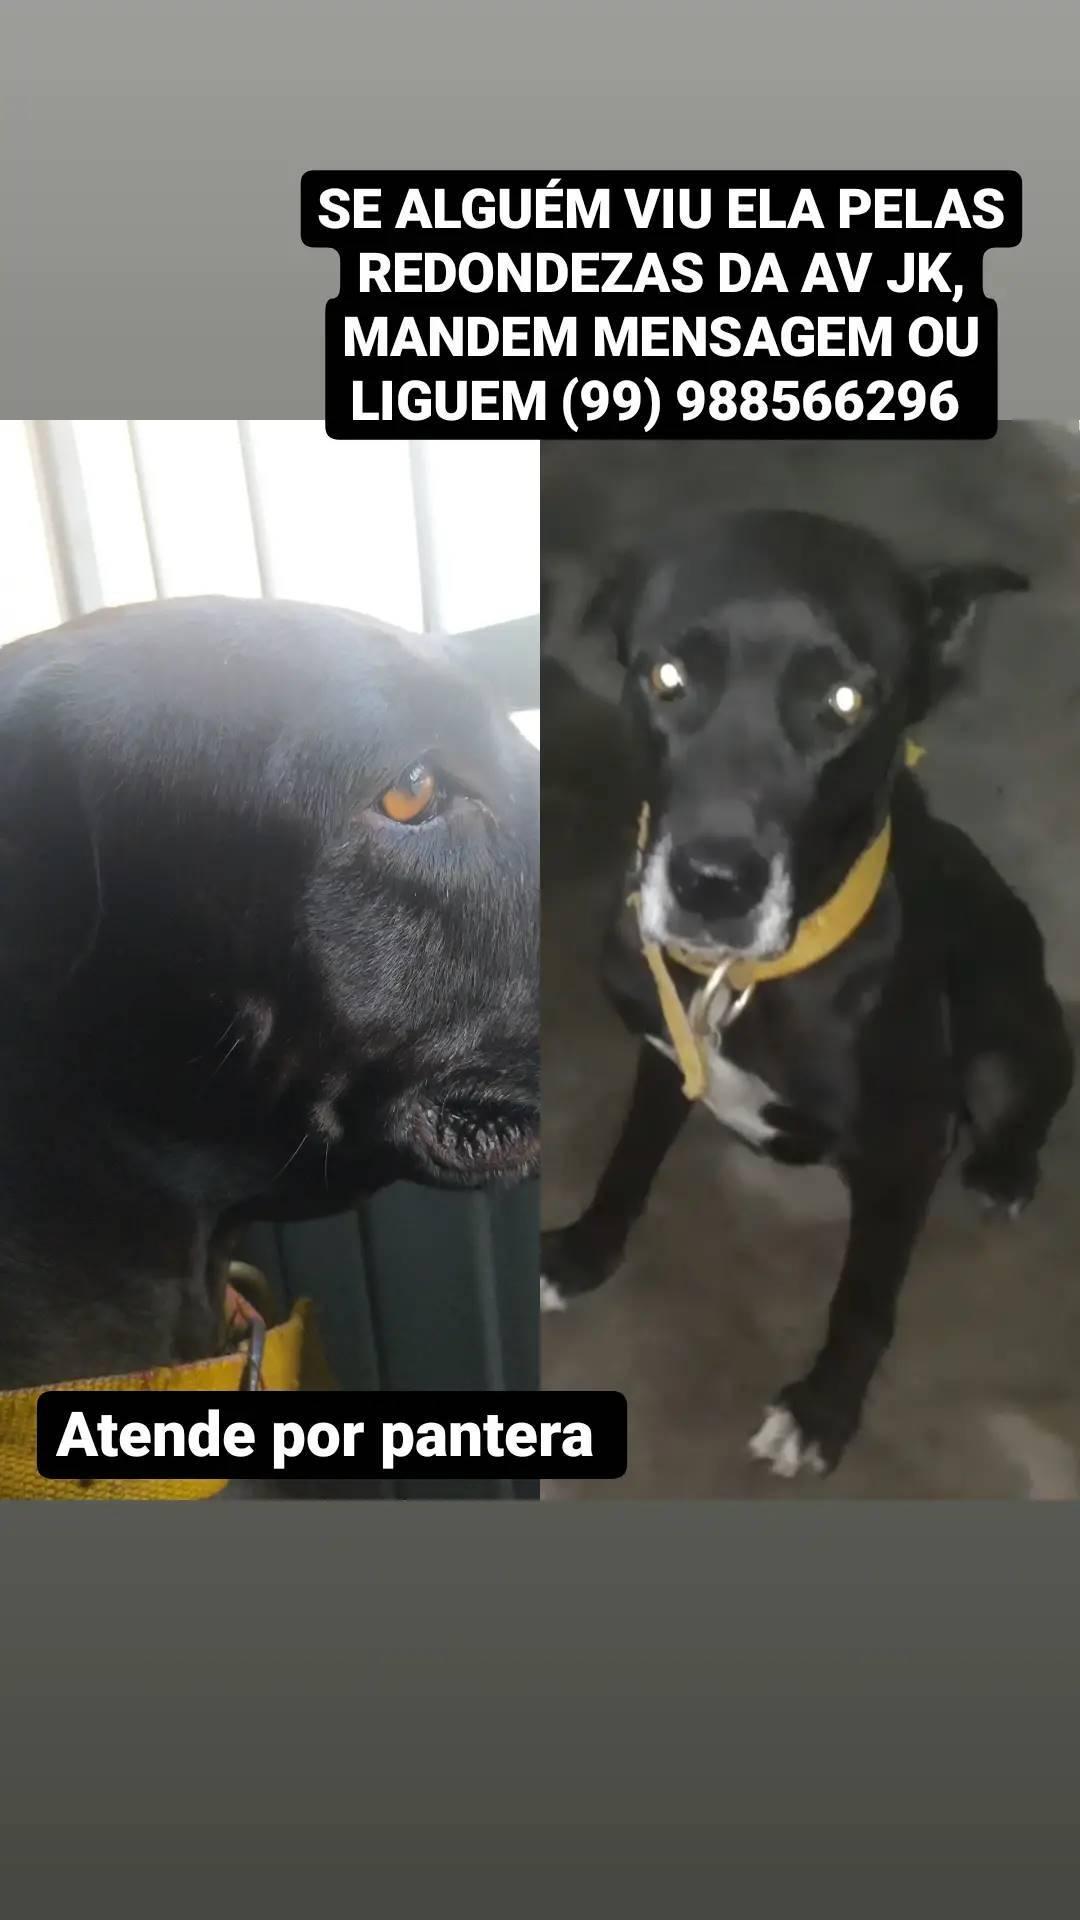 DOG ARGENTINO, PANTERA